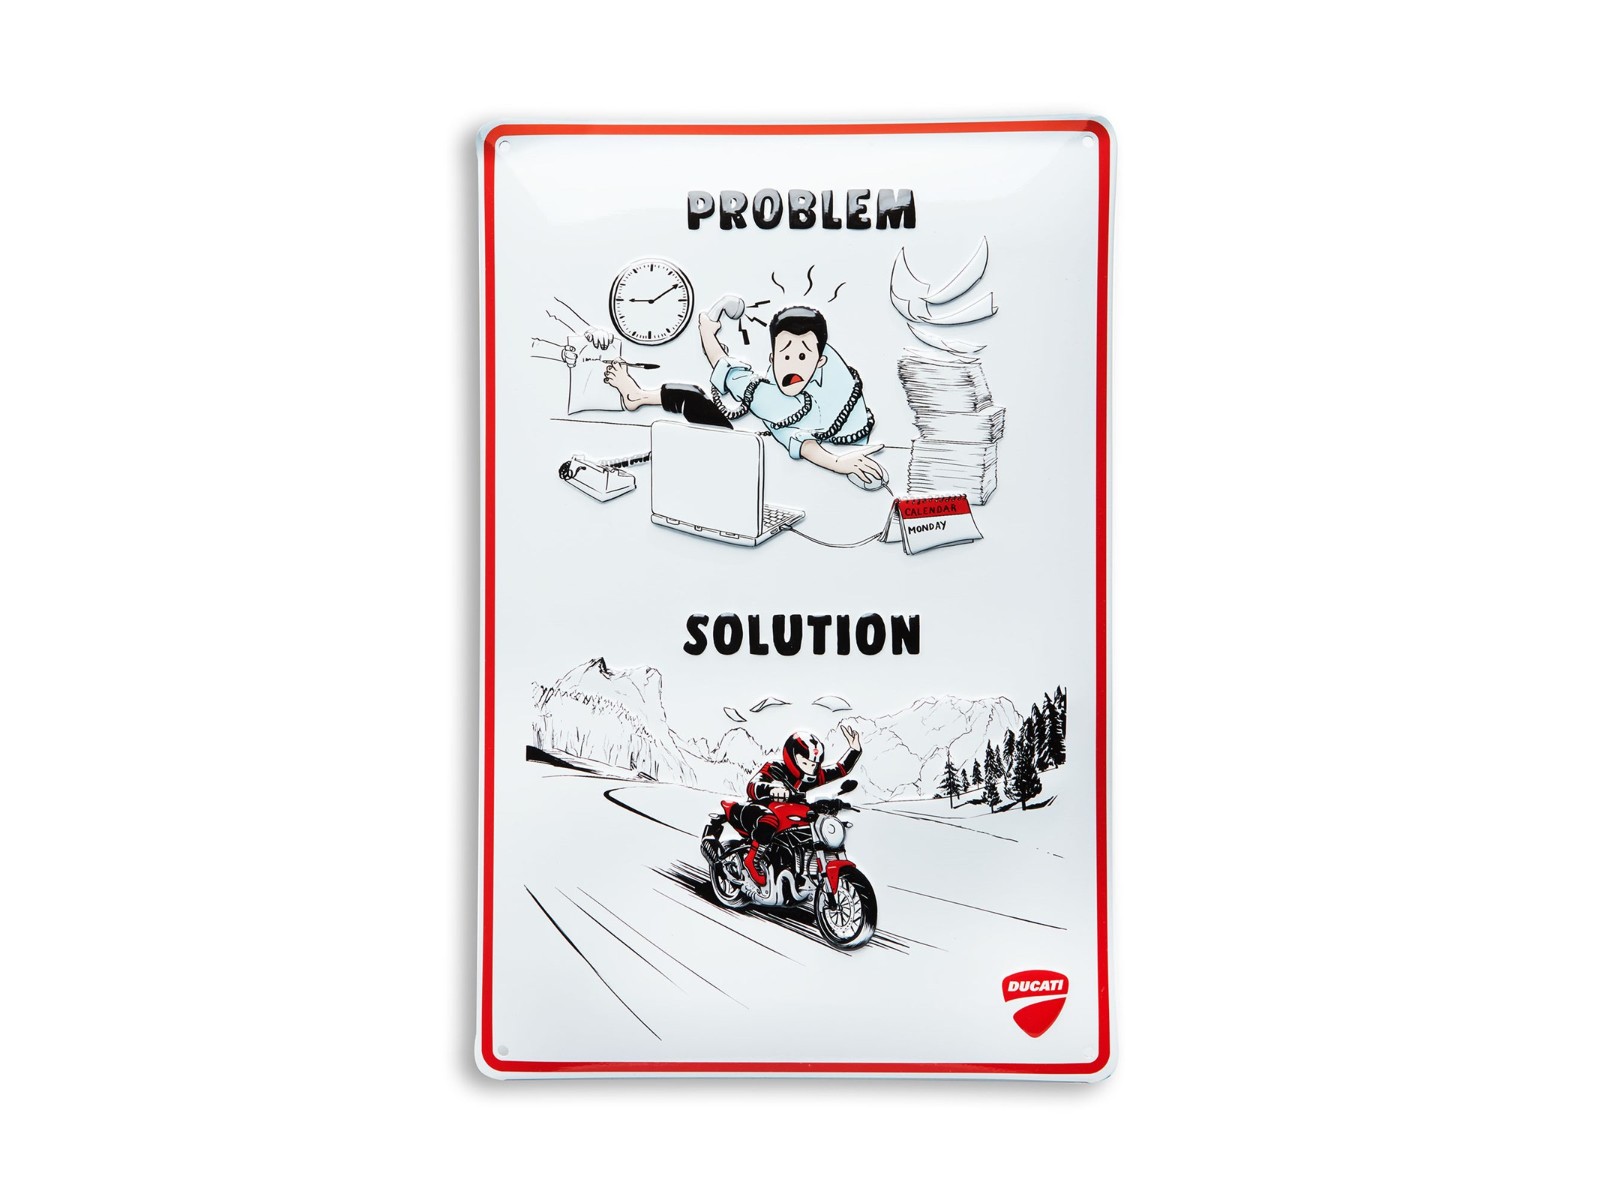 Ducati Proble – Solution metallikilpi